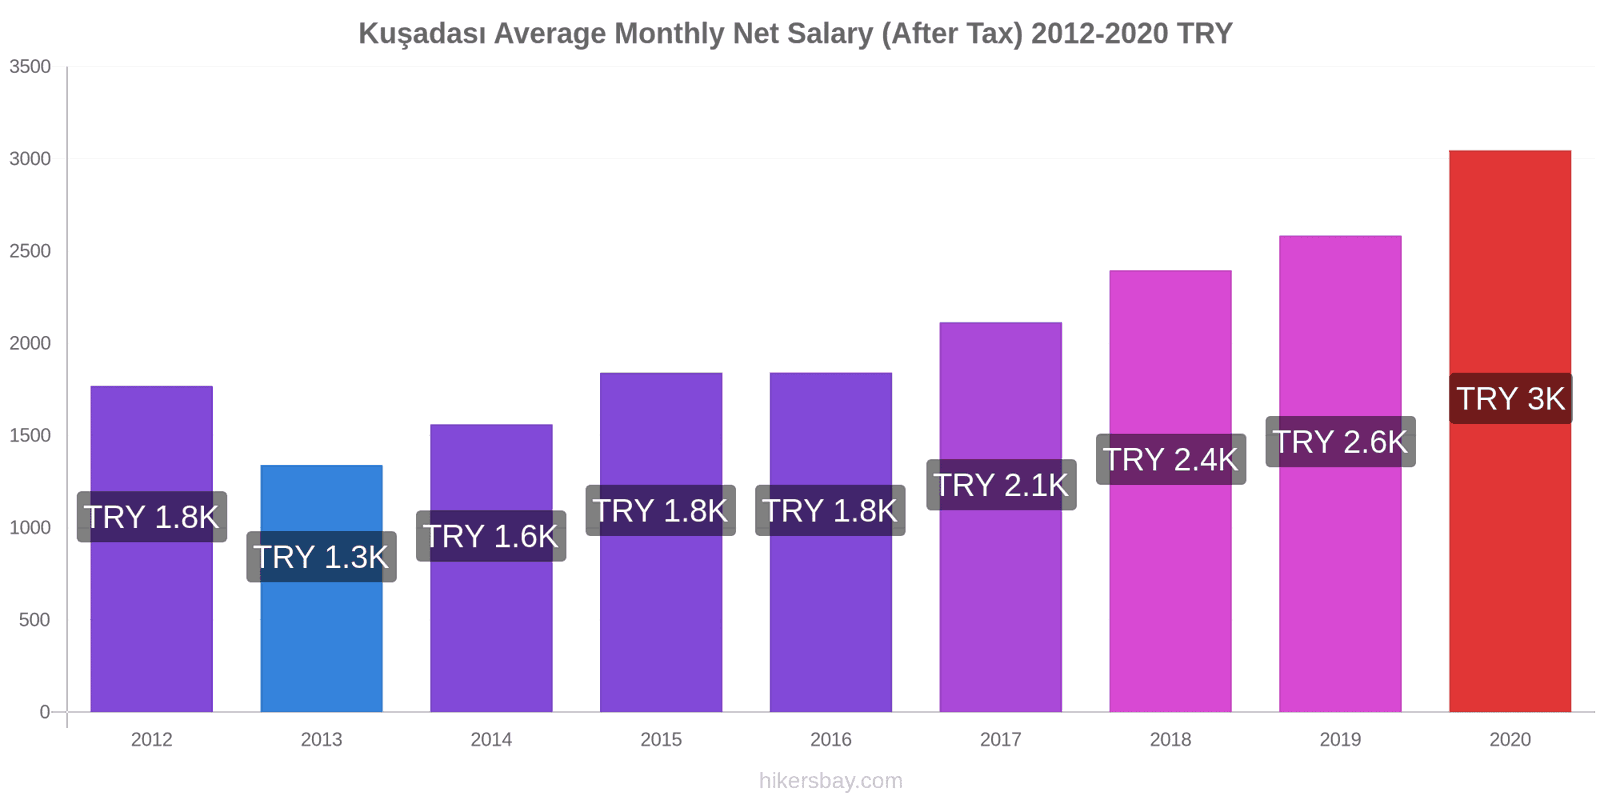 Kuşadası price changes Average Monthly Net Salary (After Tax) hikersbay.com